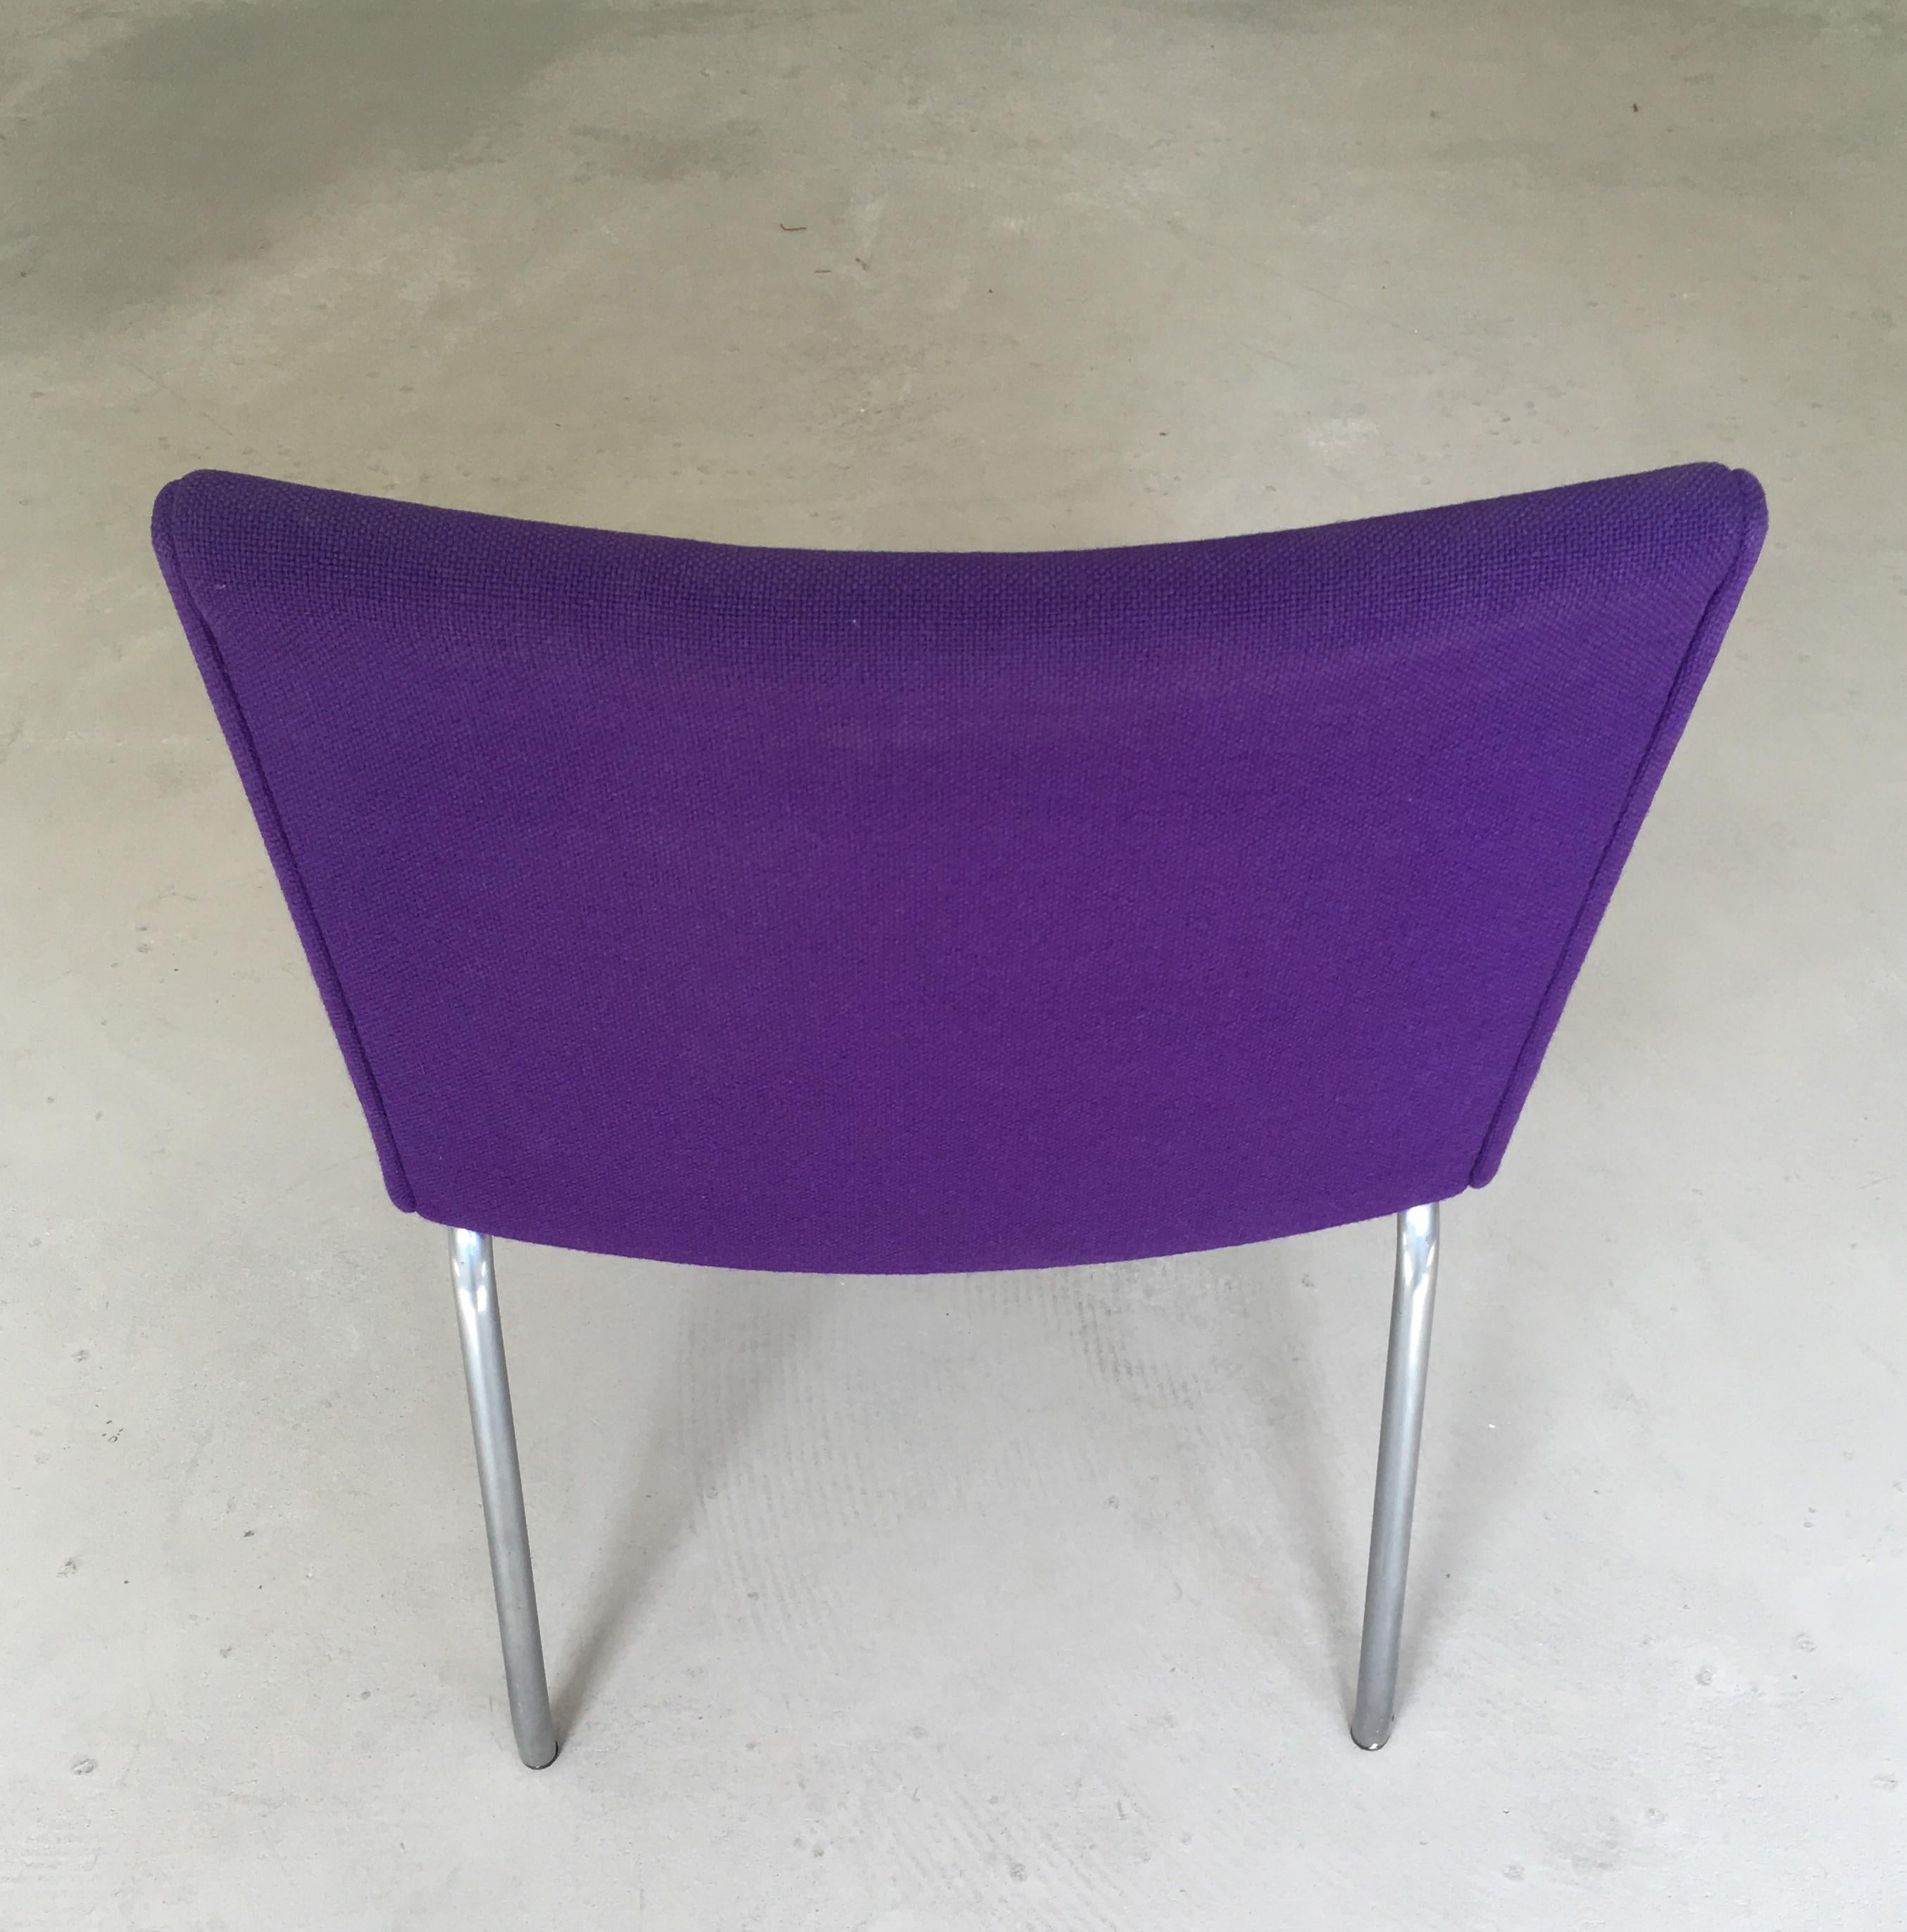 Steel 1960s Danish Hans J. Wegner Airport Chair, Reupholstered in Purple Fabric For Sale